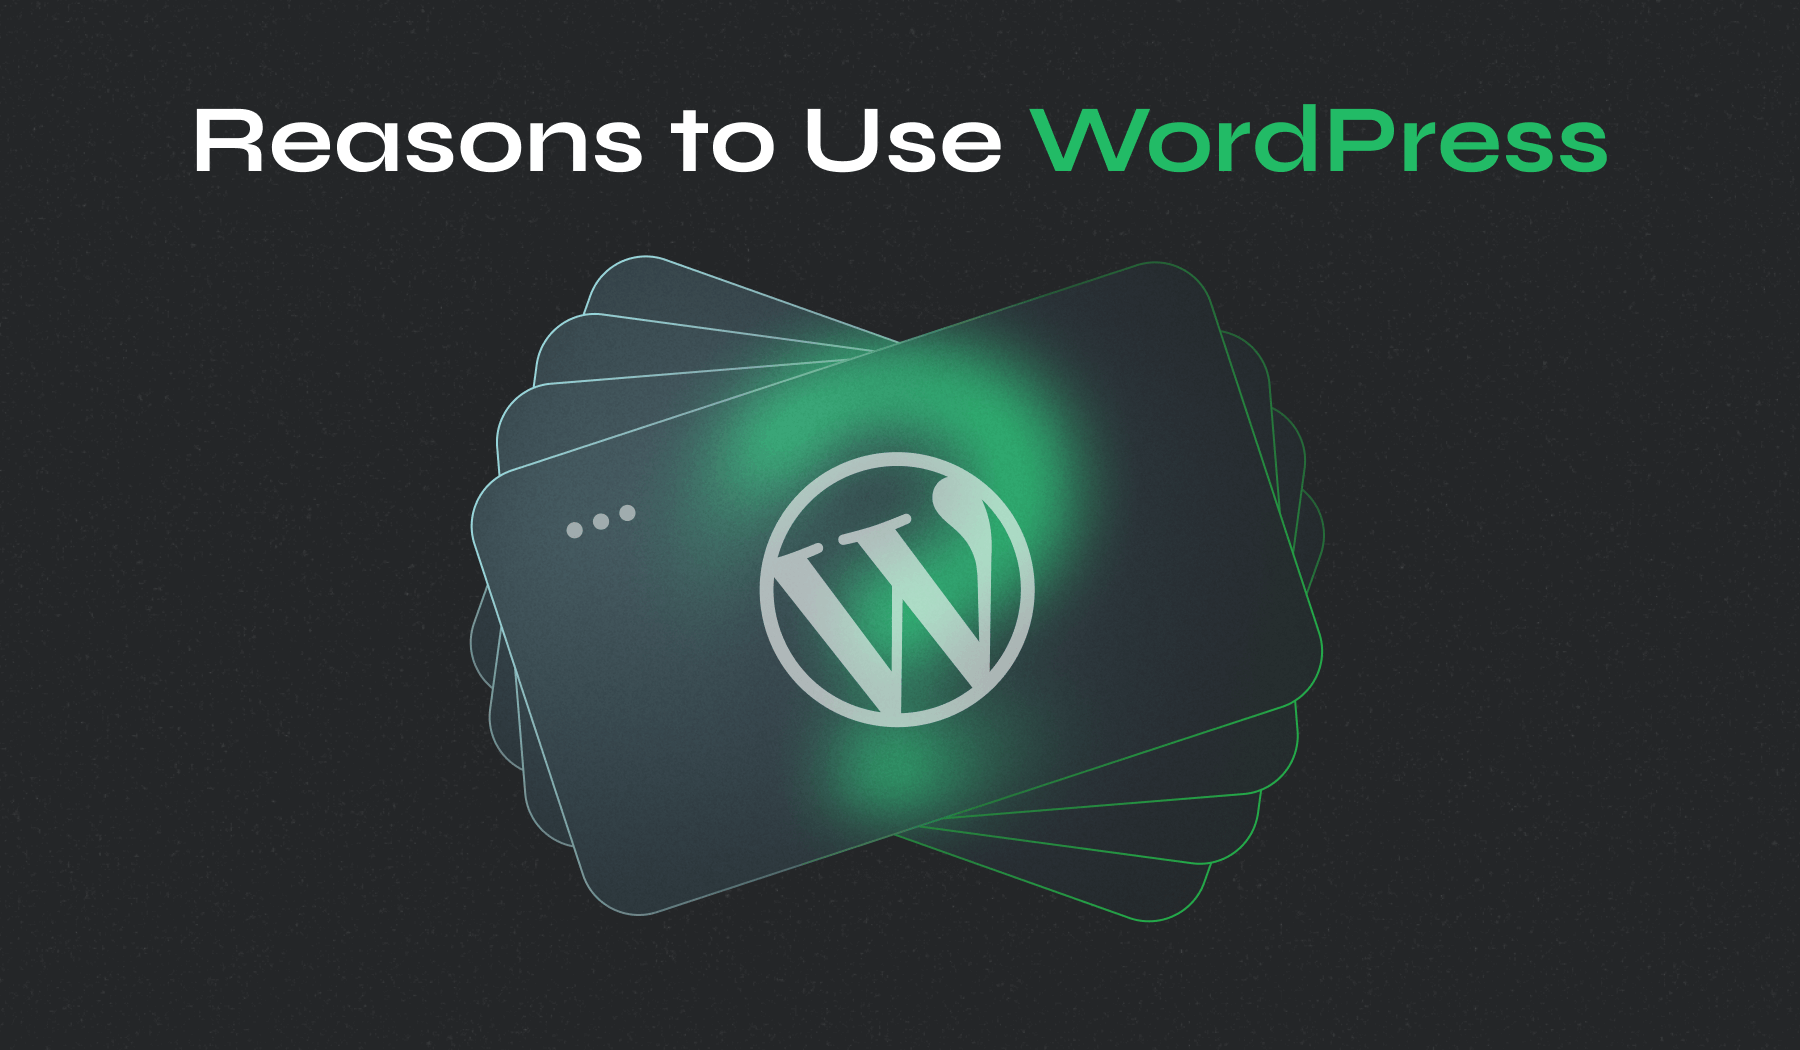 Why Use WordPress